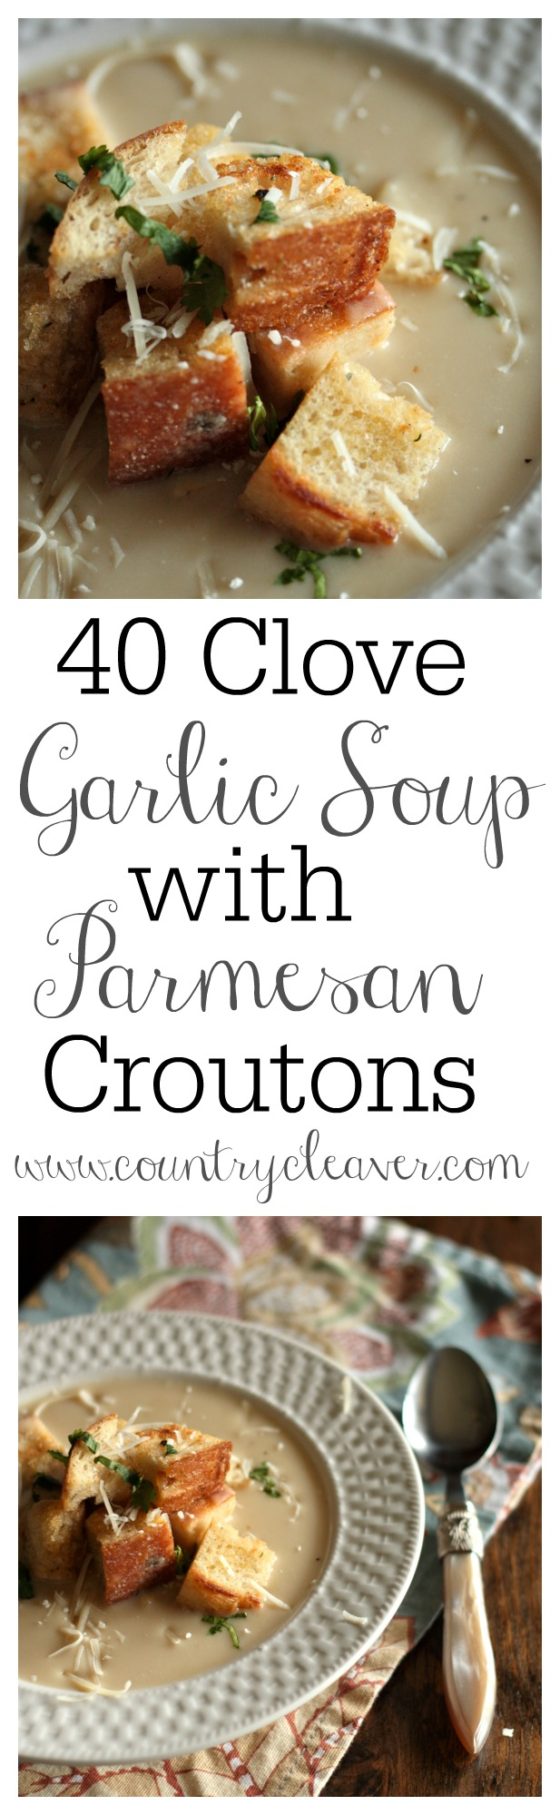 40 Clove Garlic Soup with Parmesan Croutons